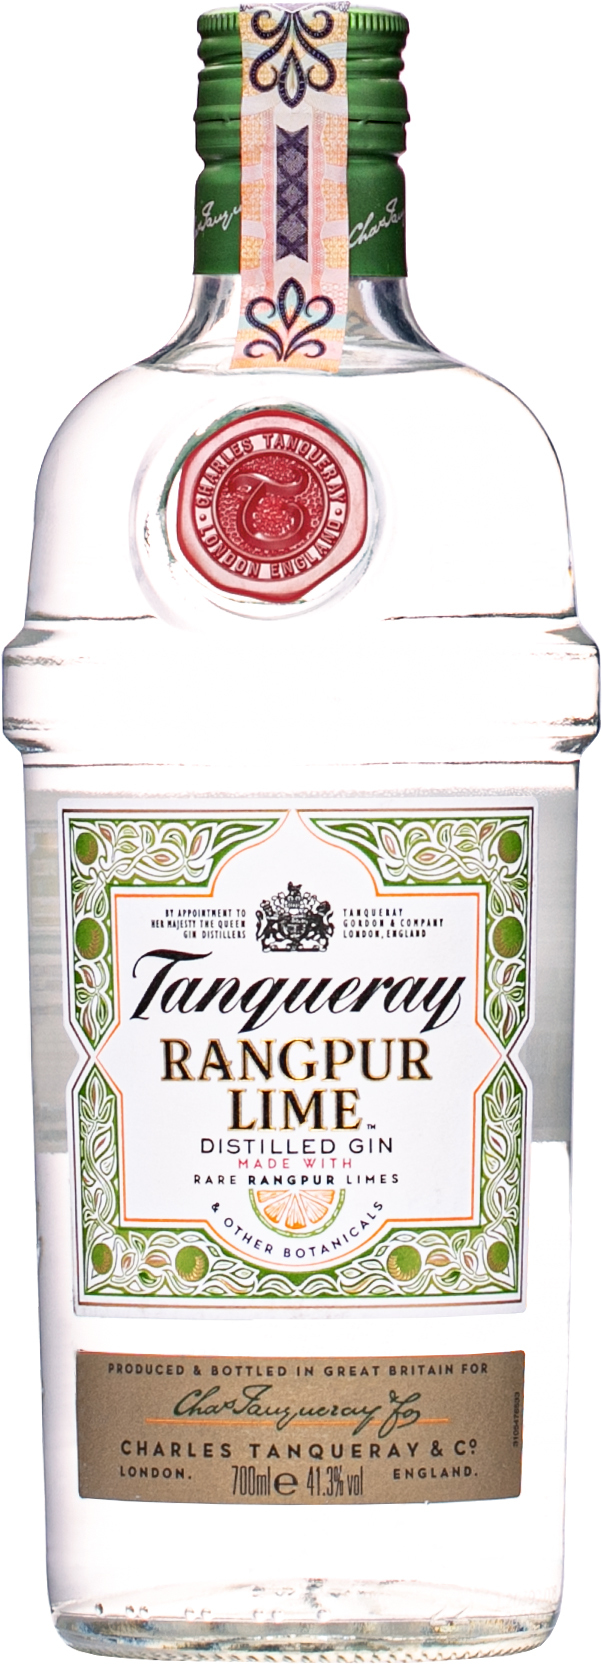 Tanqueray Rangpur Lime - Flavored | Bondston Gin